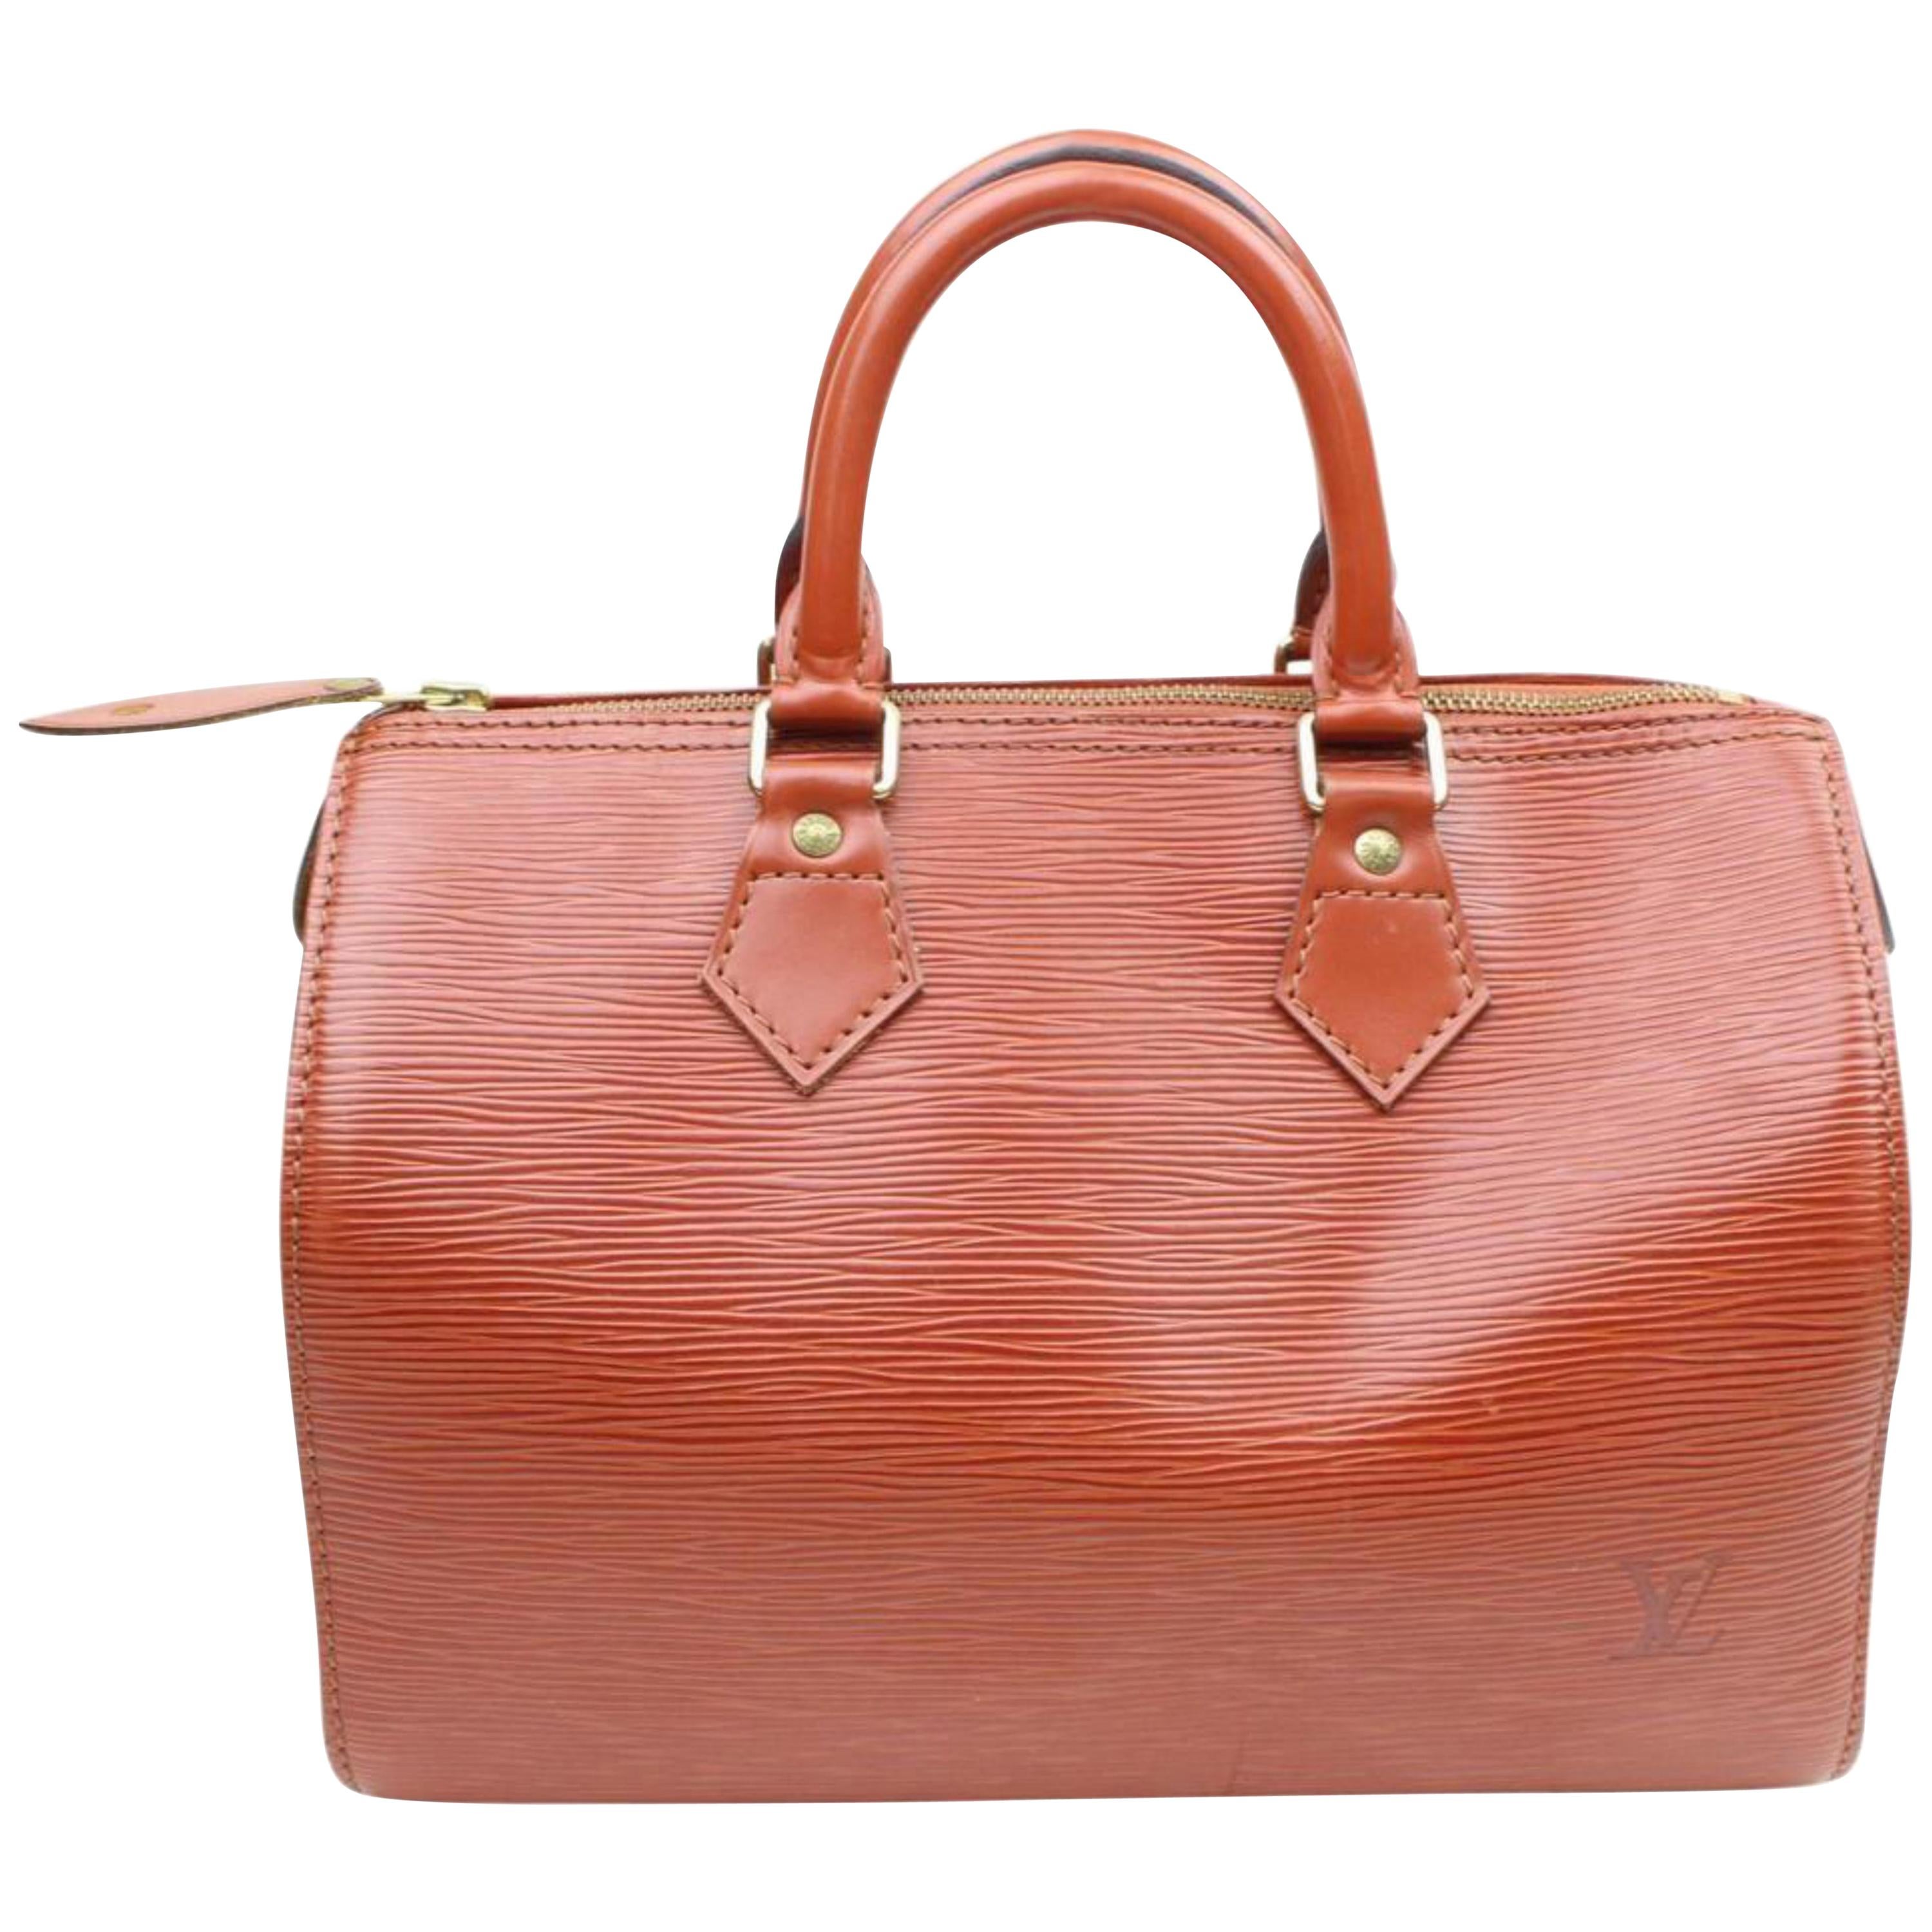 Louis Vuitton Speedy 25 869648 Brown Leather Satchel For Sale